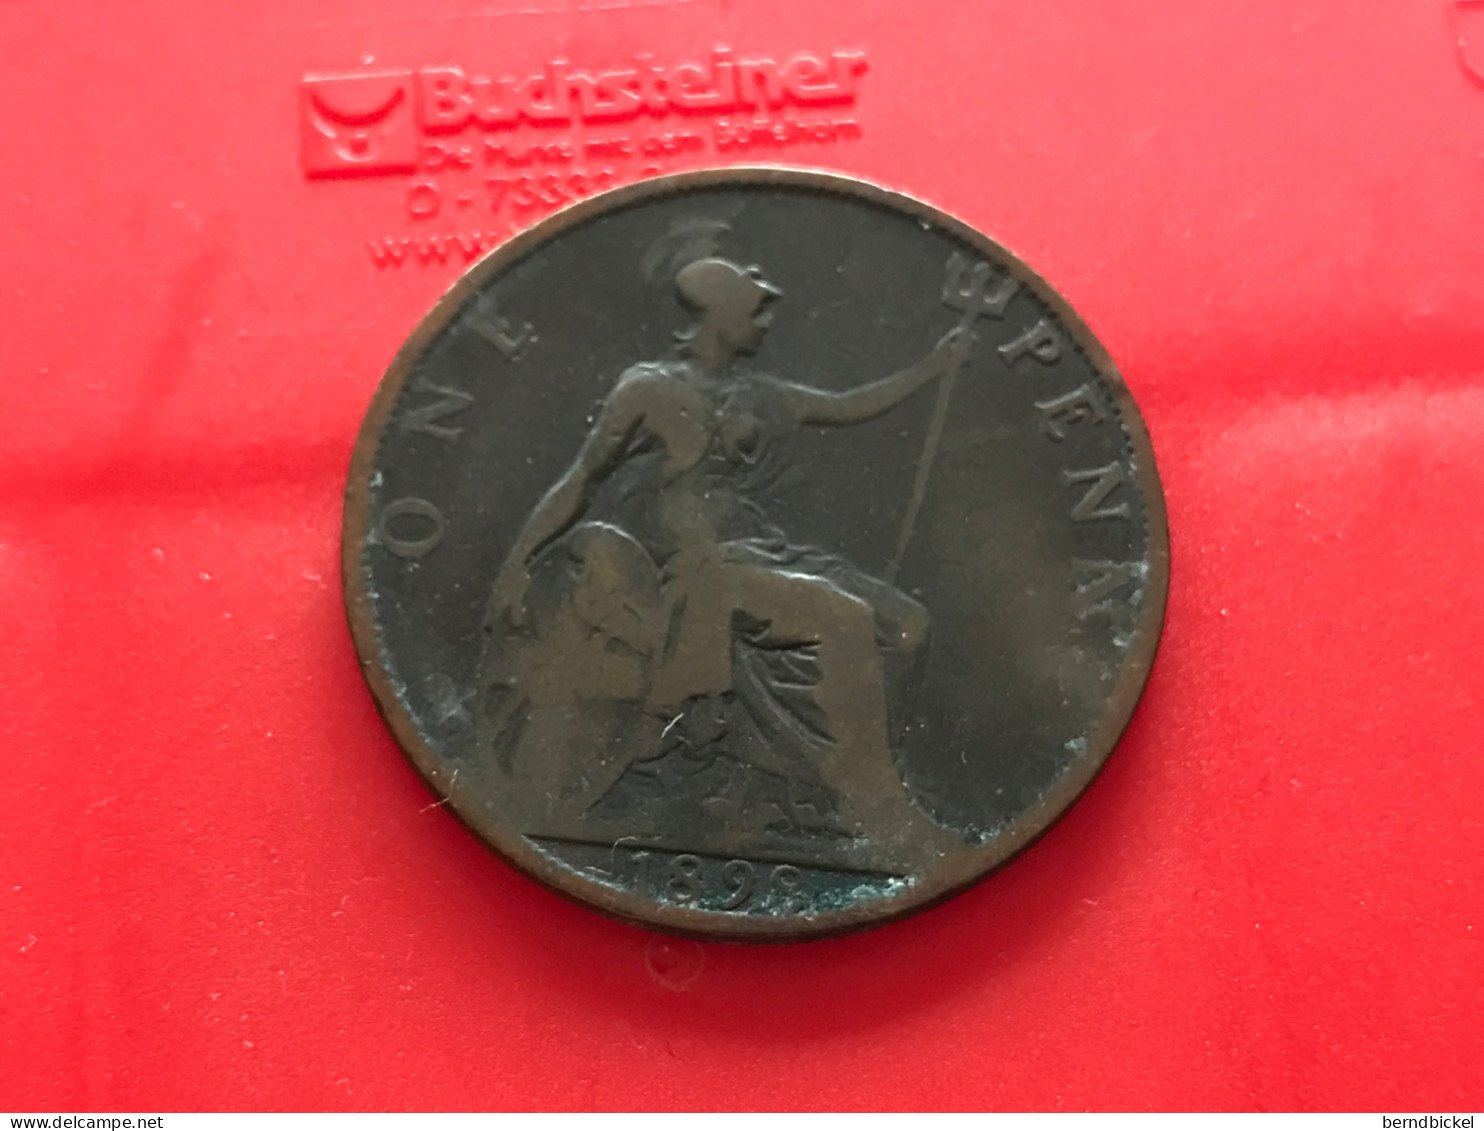 Münze Münzen Umlaufmünze Großbritannien 1 Penny 1898 - D. 1 Penny